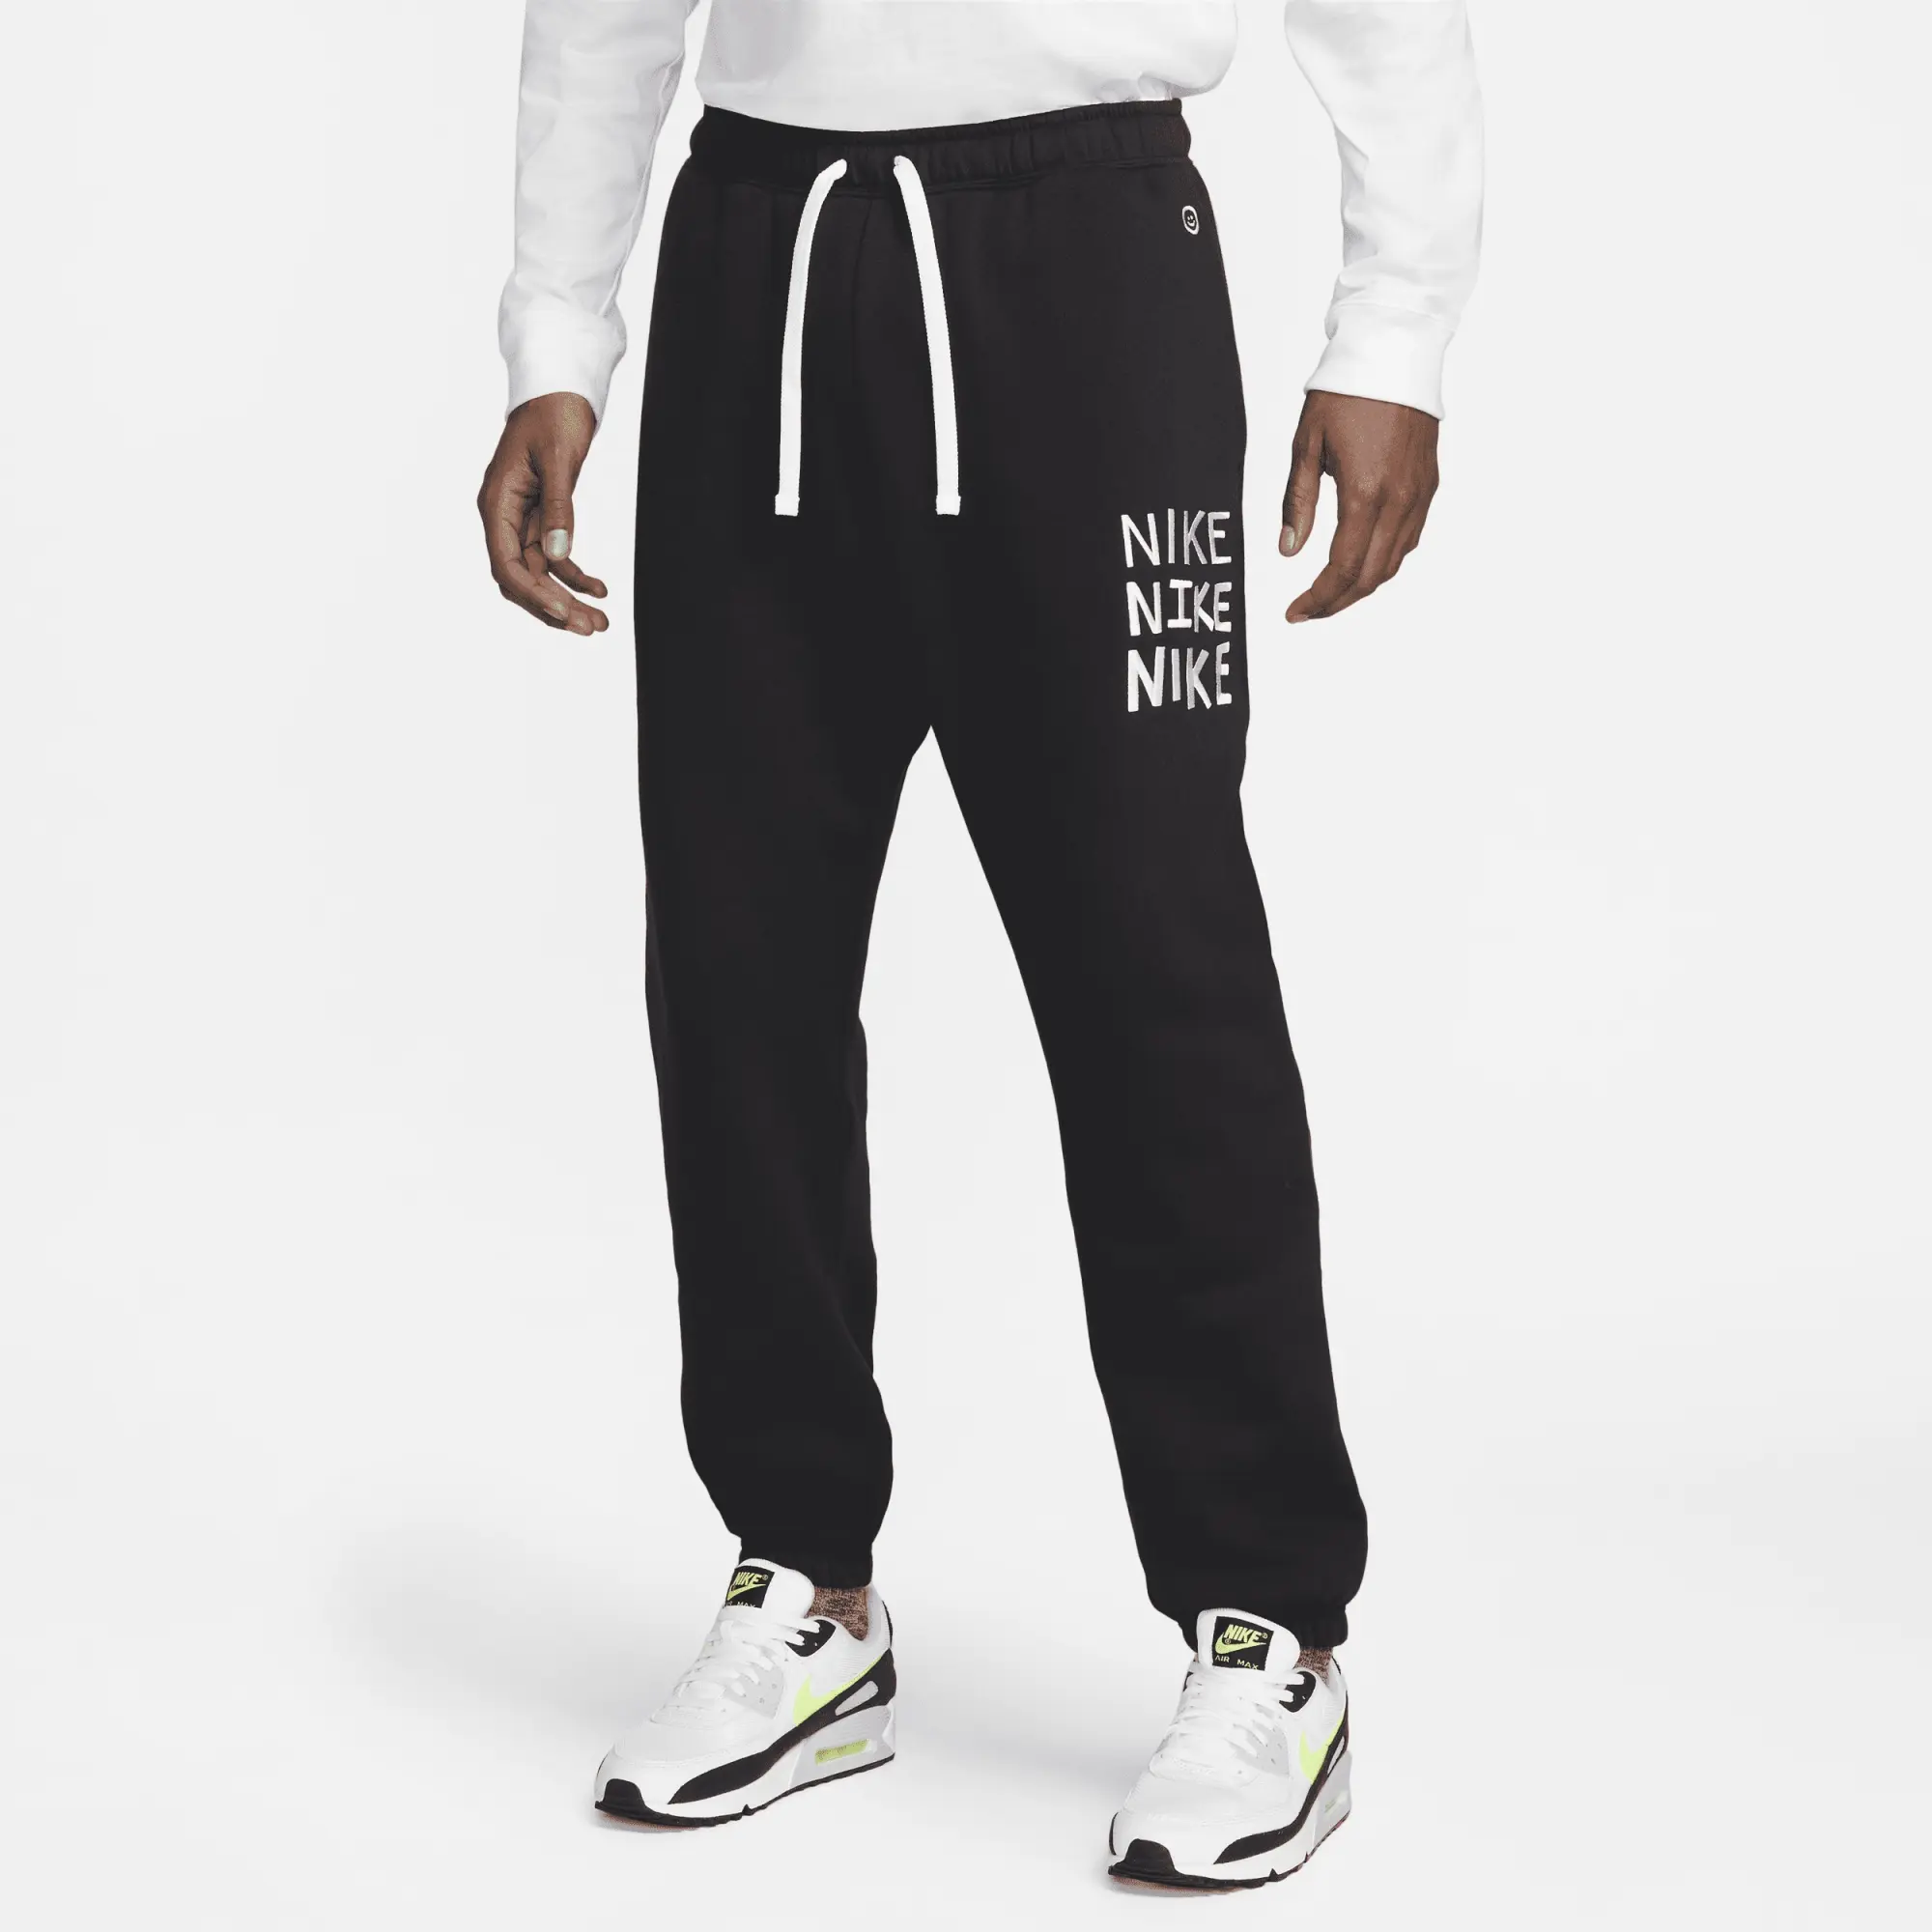 Nike Sportswear Have a Nike Day Joggers, Black | DQ4081-010 | FOOTY.COM